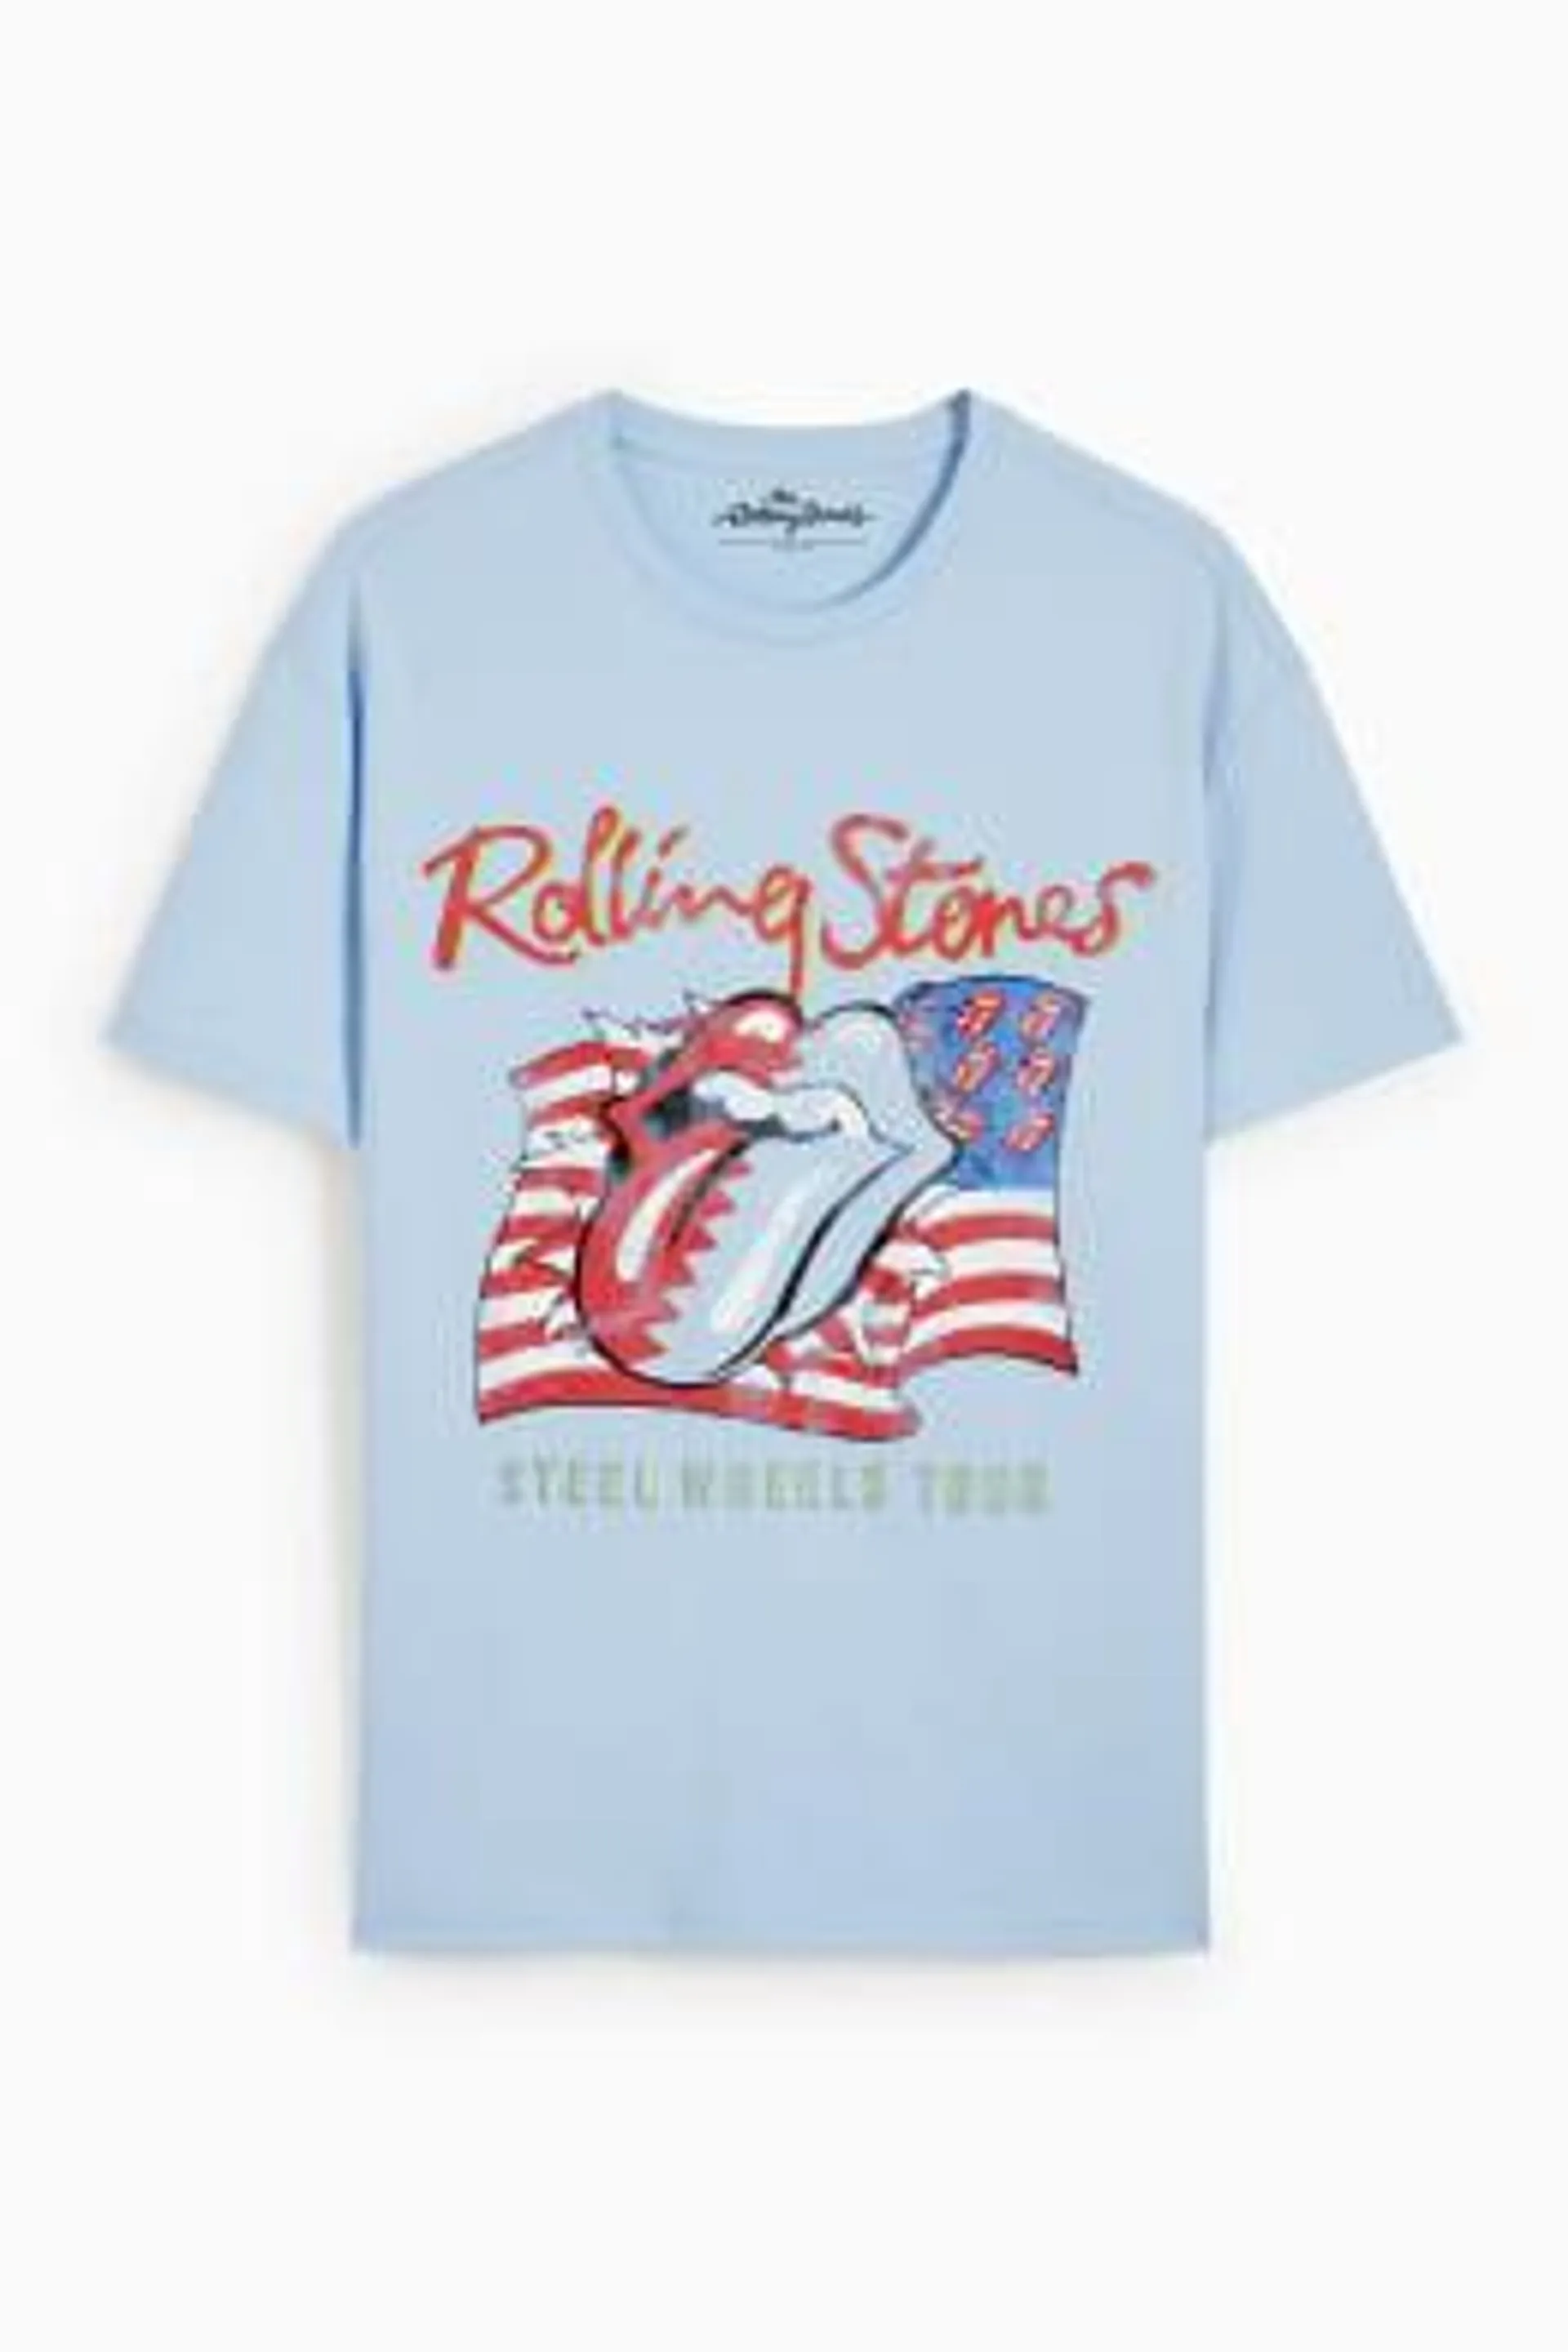 T-shirt - Rolling Stones